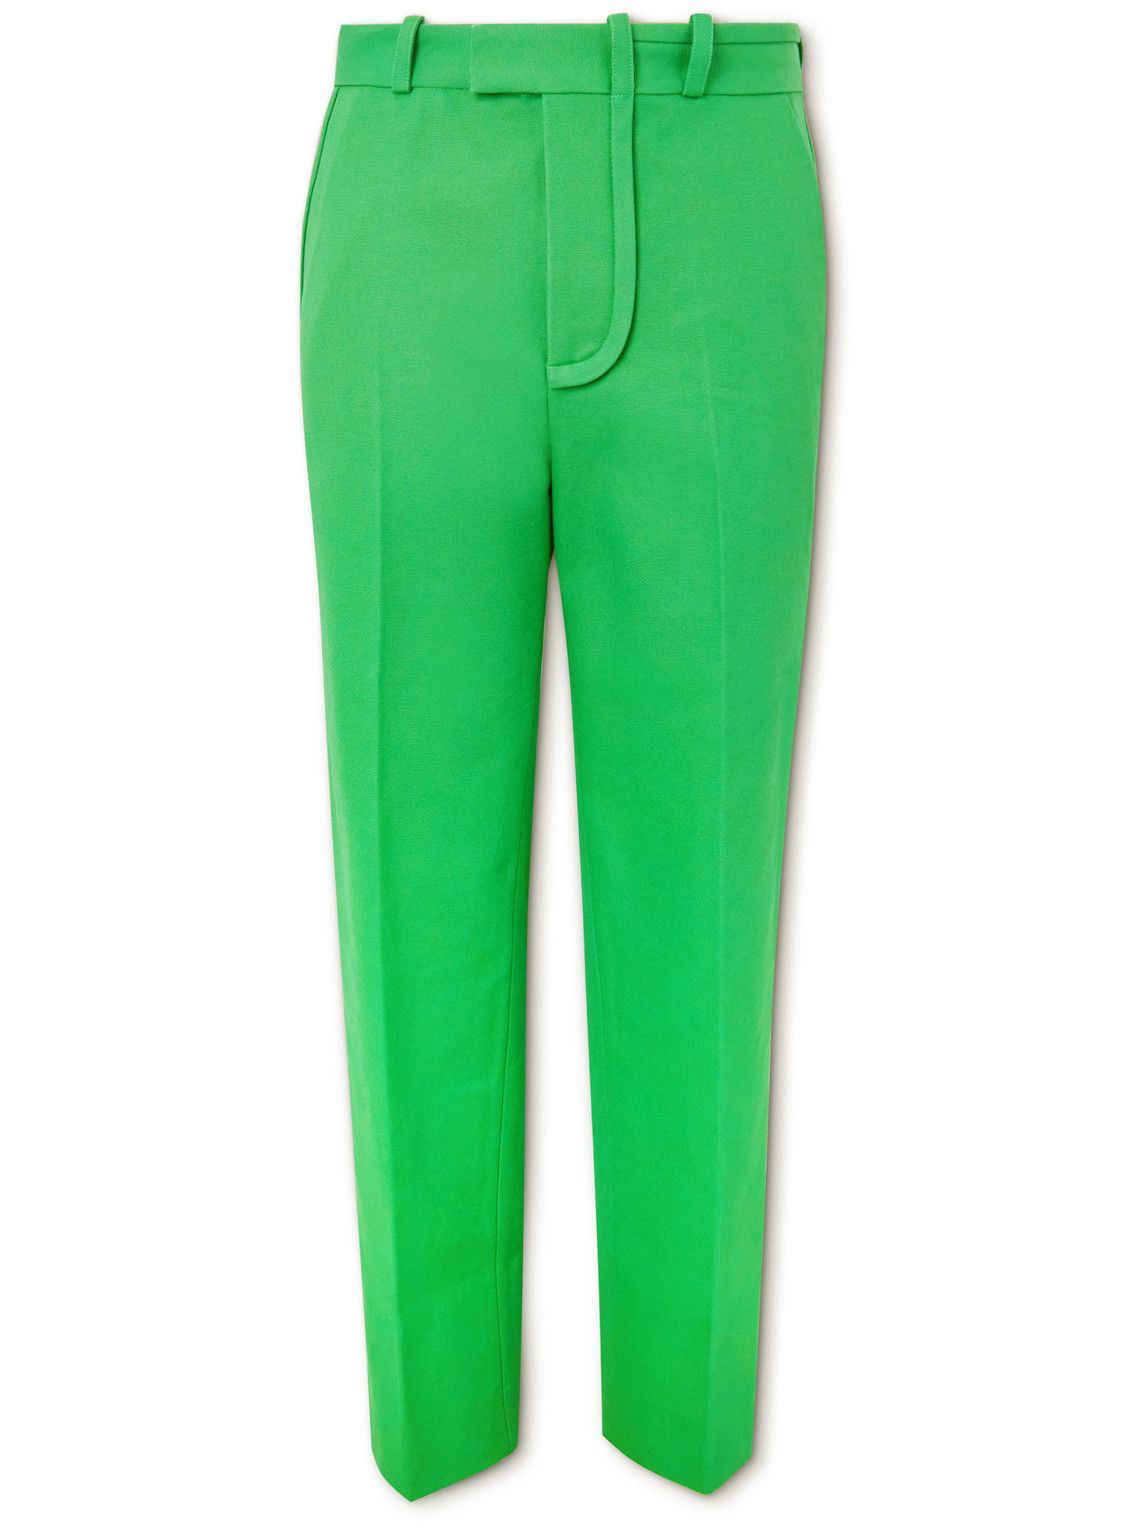 Cheap Waist And Leg Pleated Sweatpants 810 Green